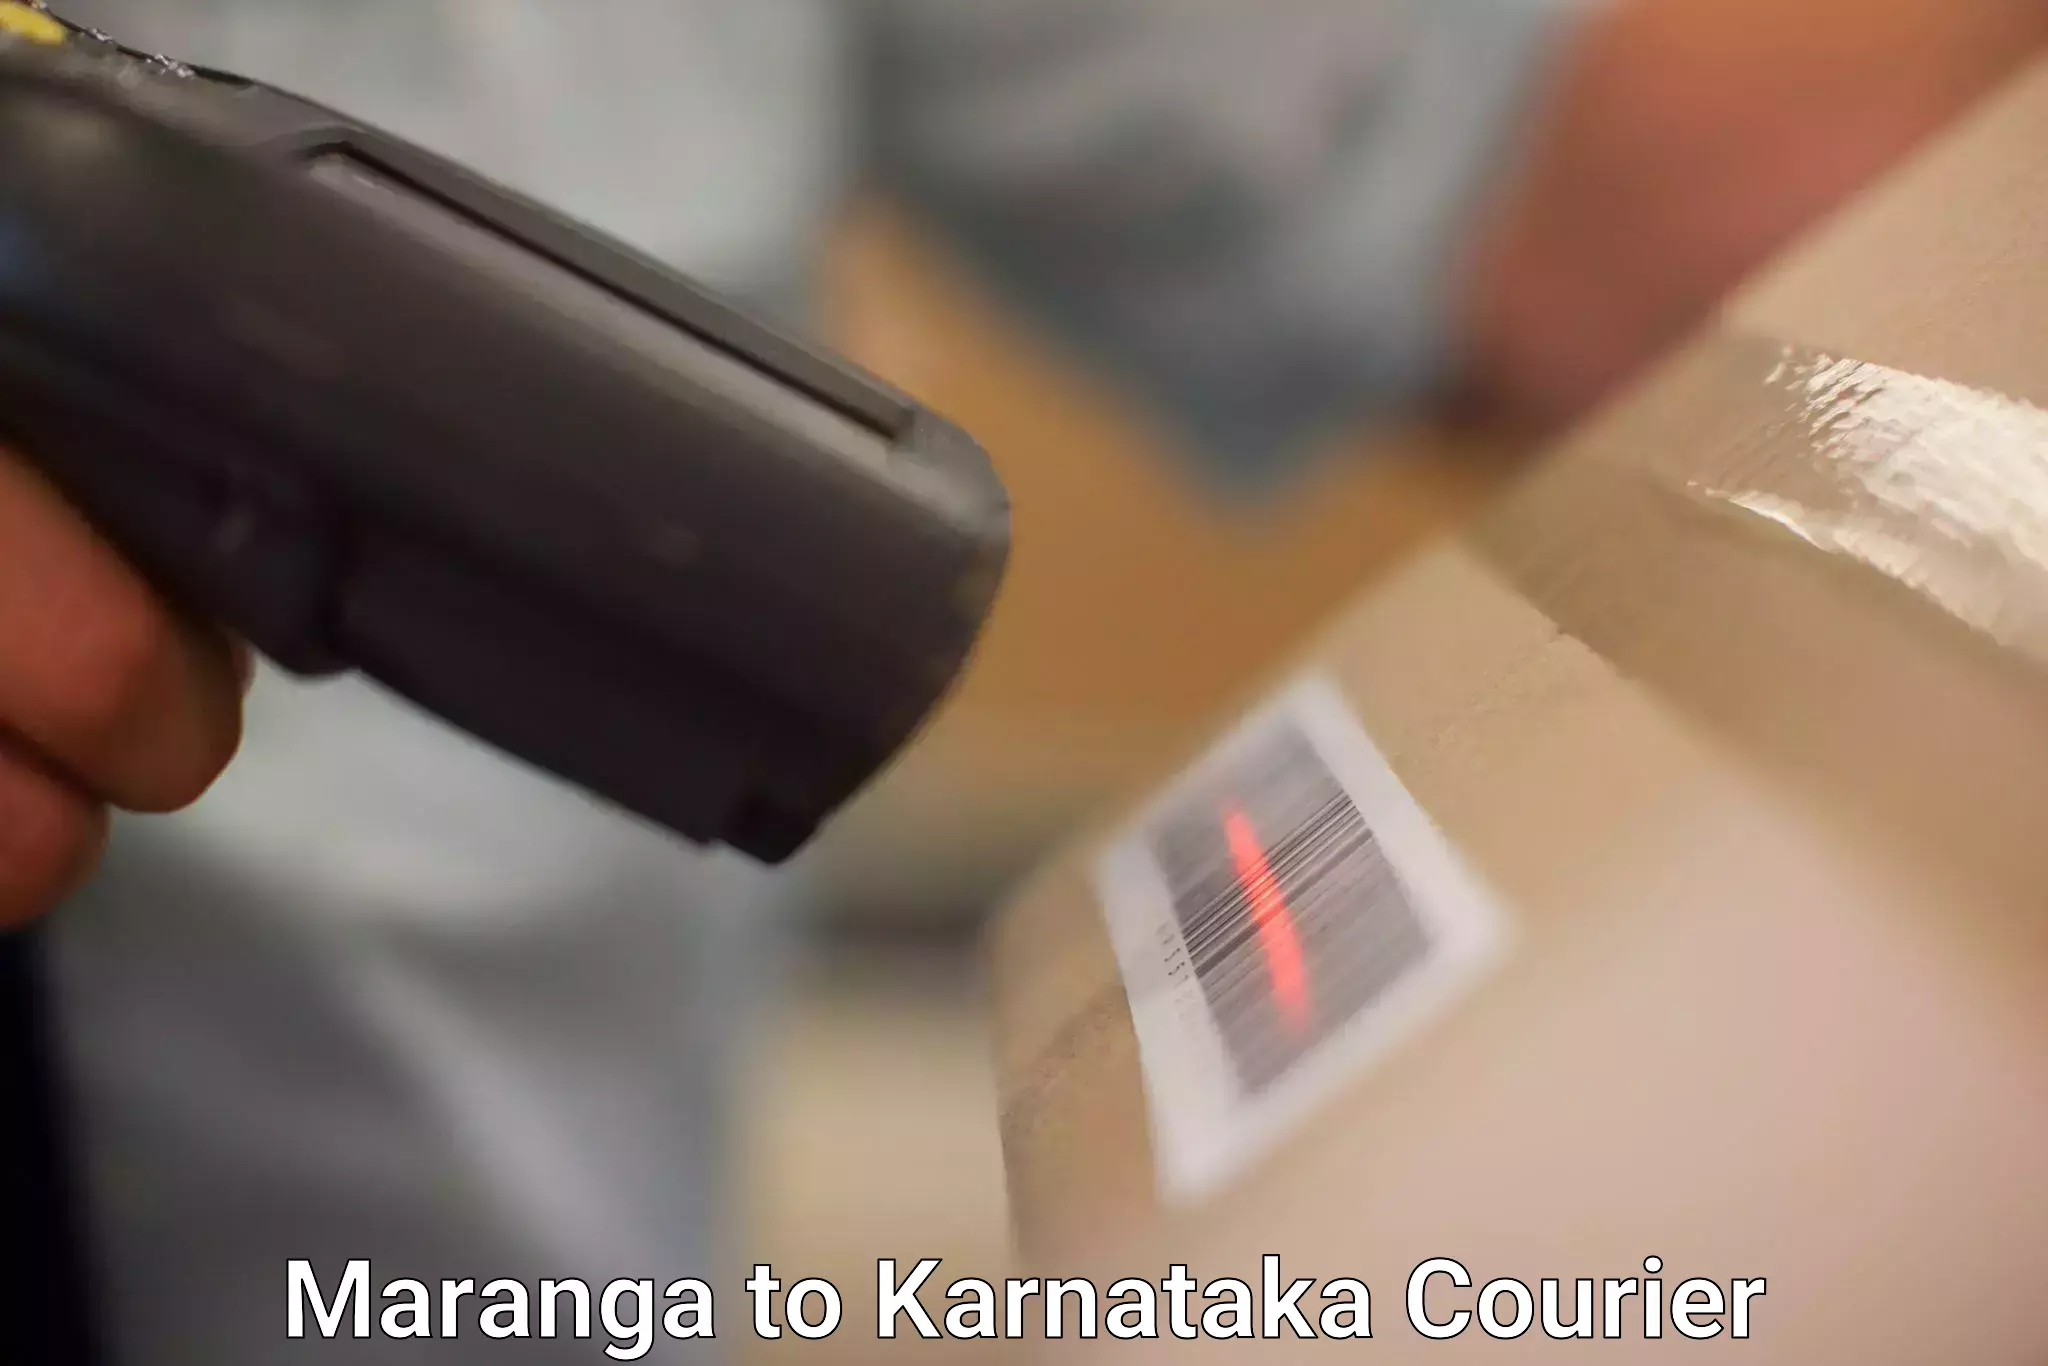 Courier service efficiency Maranga to Yelburga